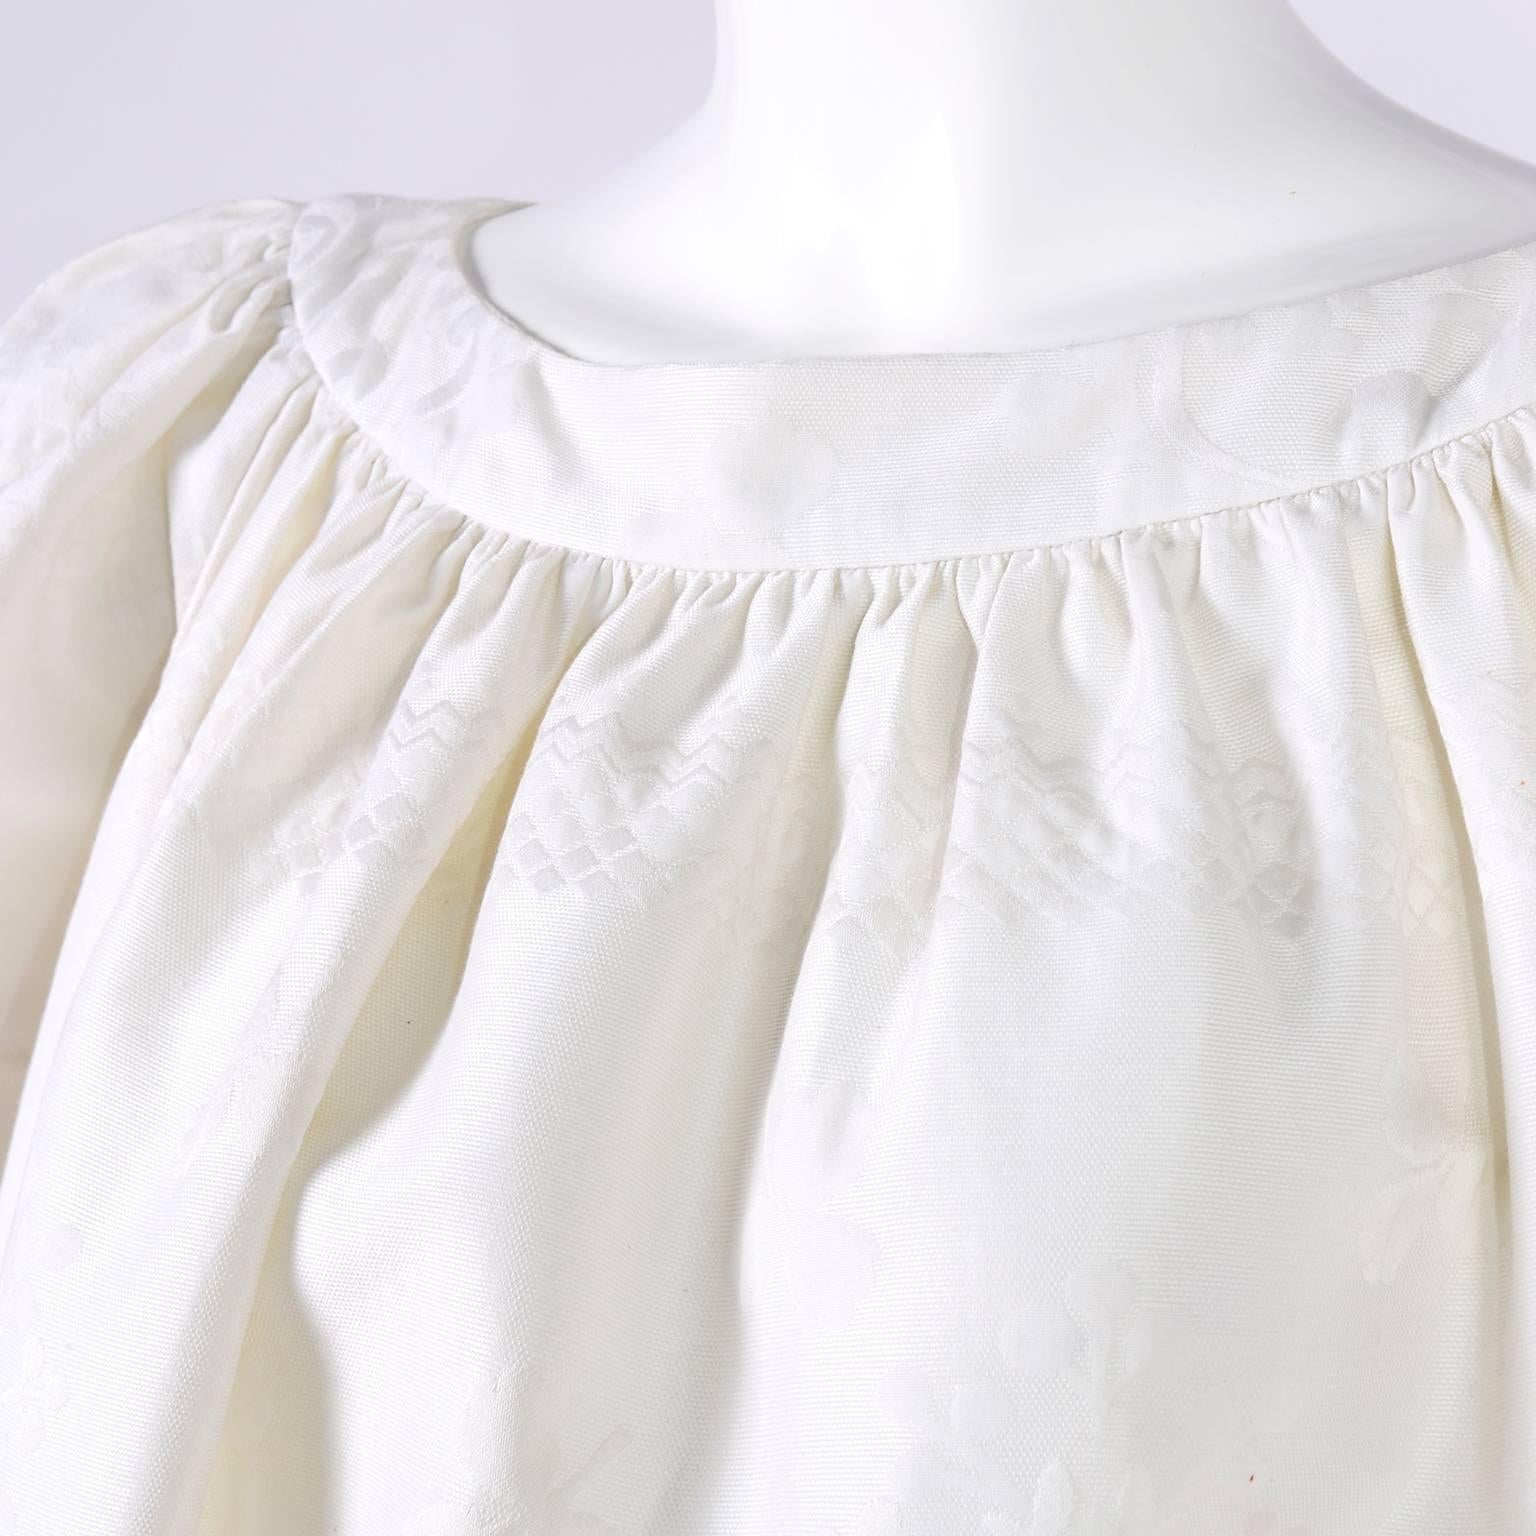 1980s Christian Lacroix Vintage White Linen Damask Tunic or Dress w Original Tag For Sale 1